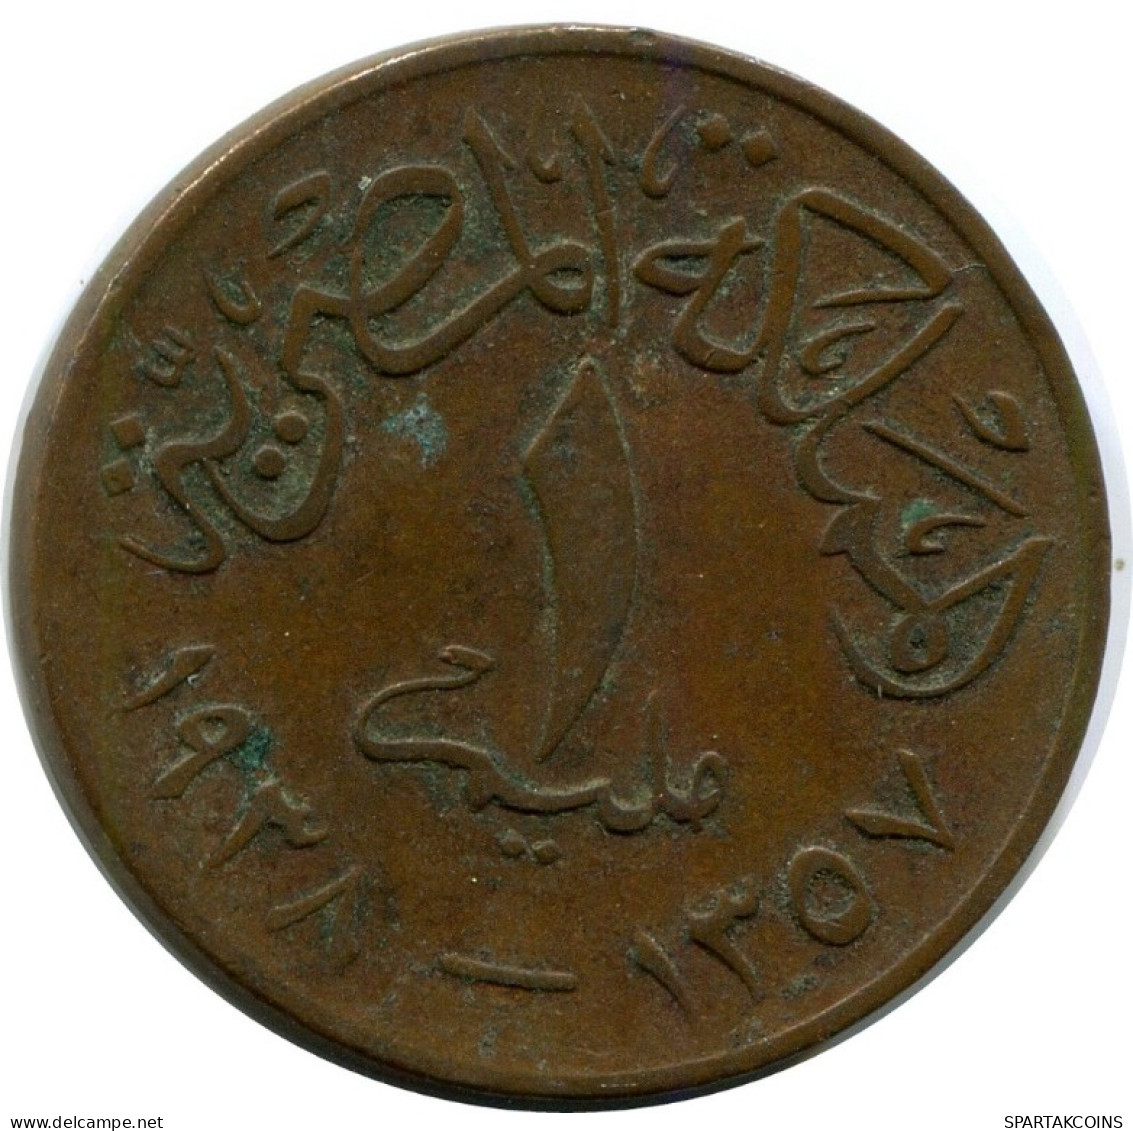 1 MILLIEME 1938 ÄGYPTEN EGYPT Islamisch Münze #AK088.D.A - Egypt